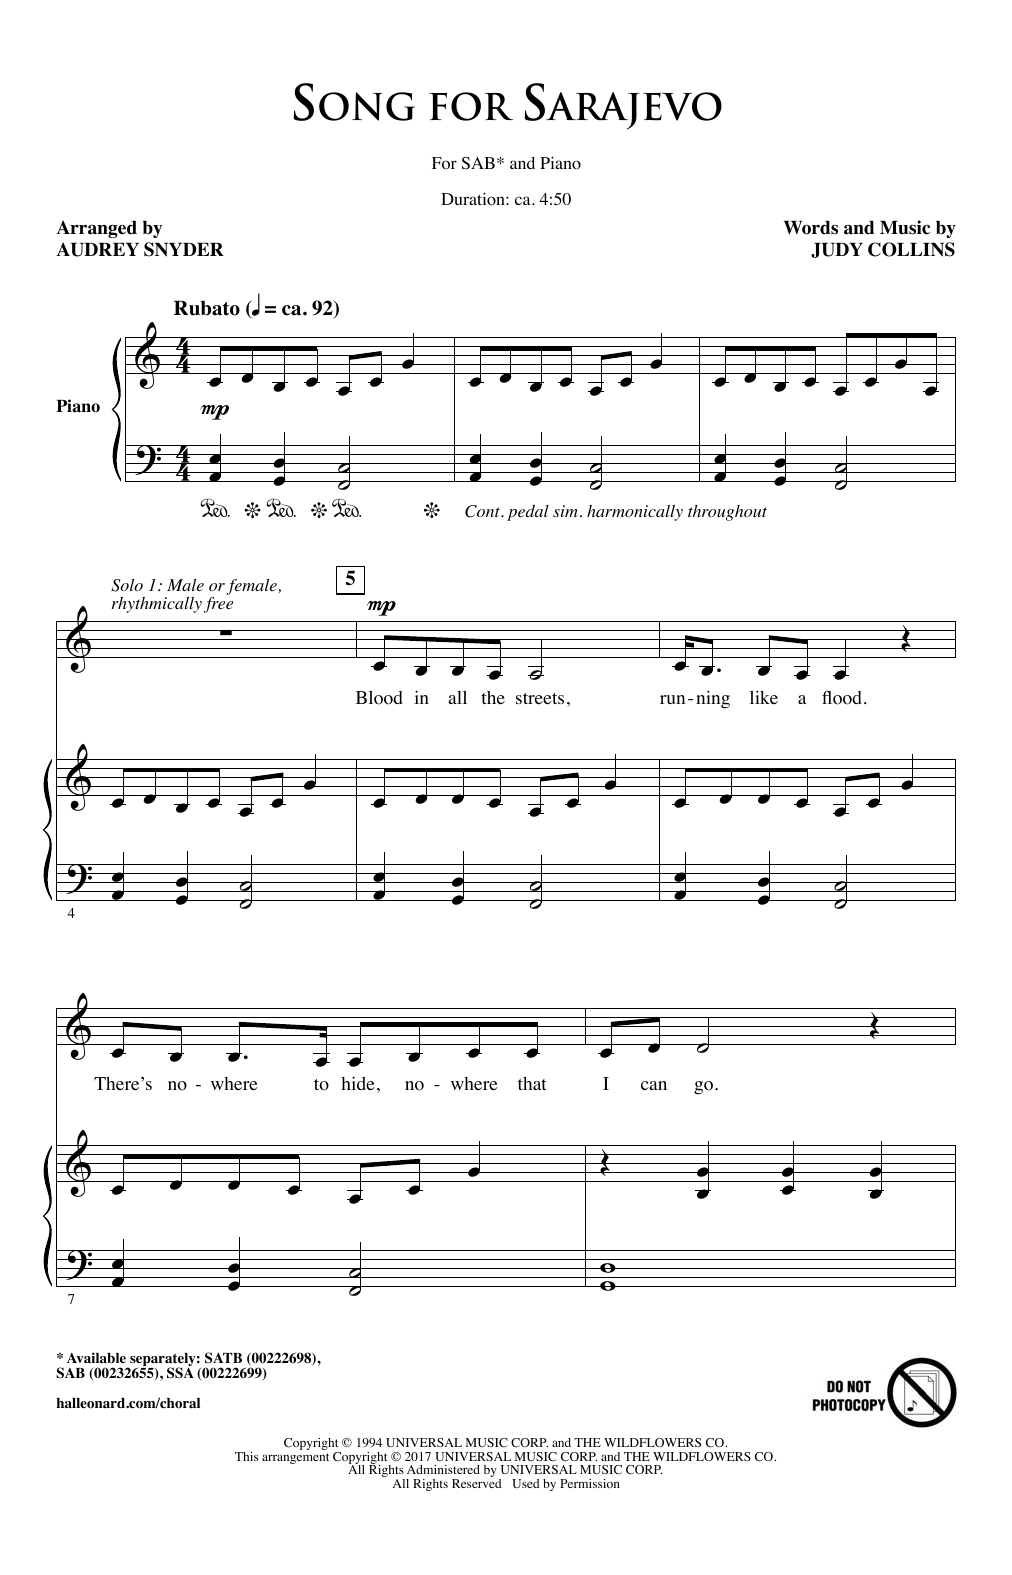 Audrey Snyder Song For Sarajevo Sheet Music Notes & Chords for SAB - Download or Print PDF